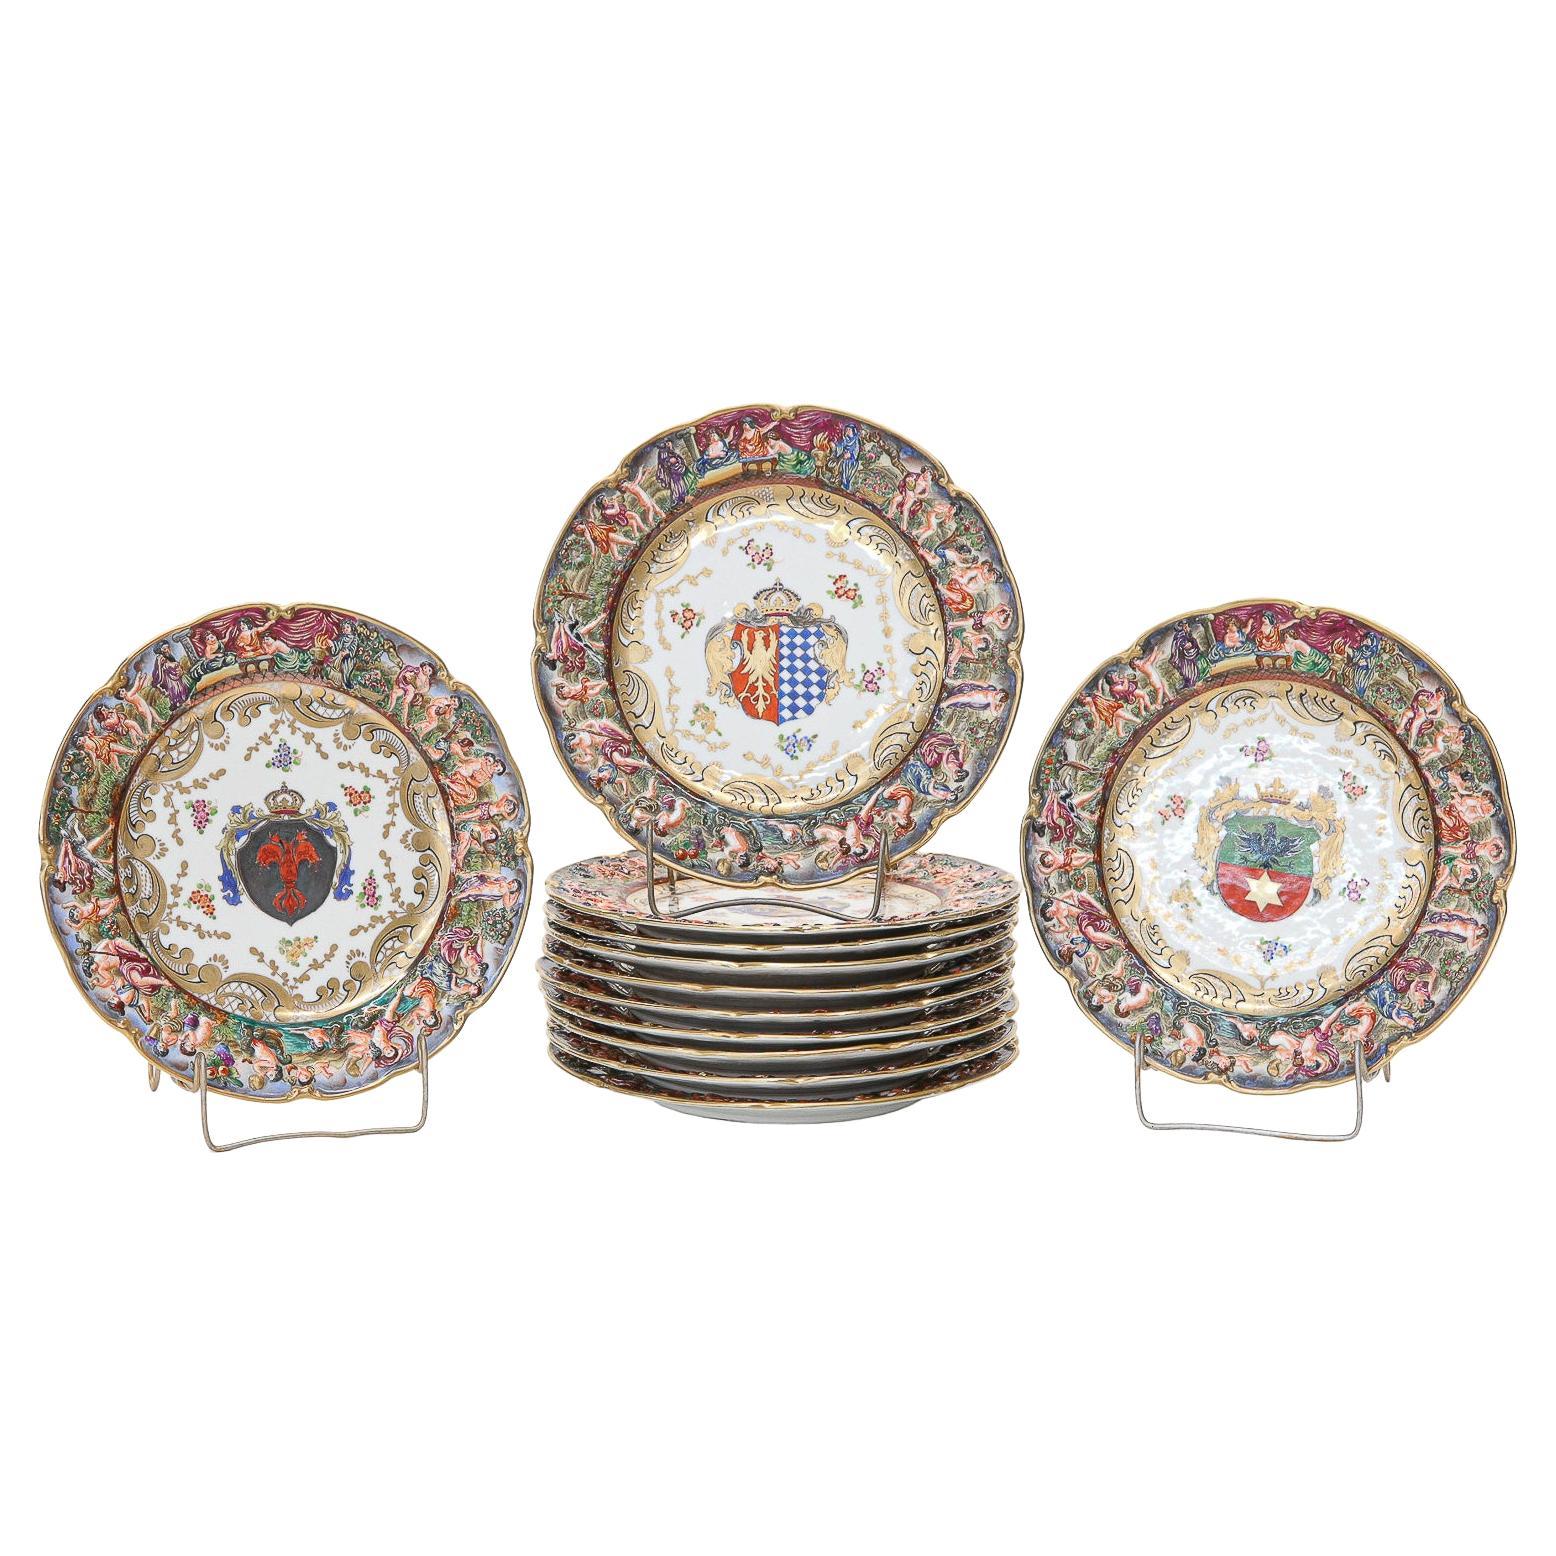 Capo Di Monte Armorial Porcelain Cabinet Plates, Set of 12